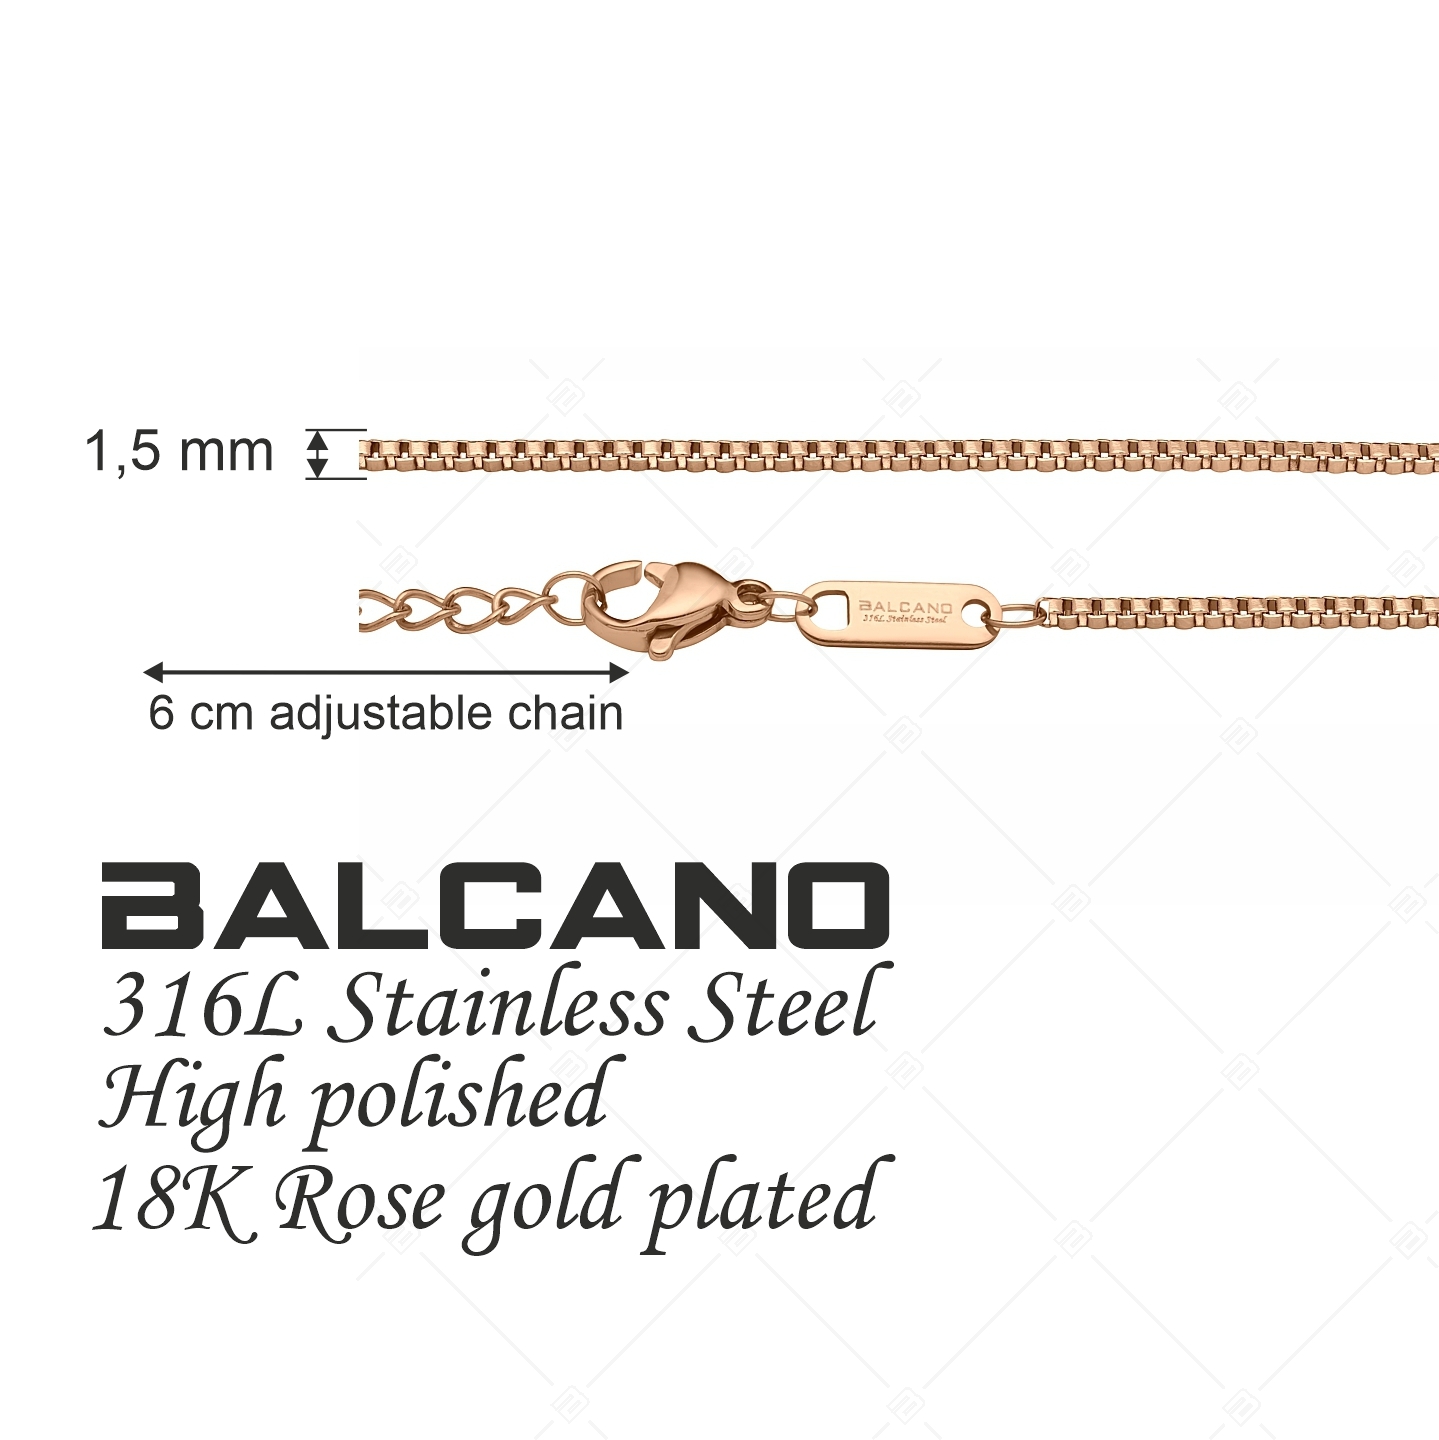 BALCANO - Venetian / Edelstahl Venezianer Kette-Fußkette  mit 18K Roségold Beschichtung - 1,5 mm (751292BC96)